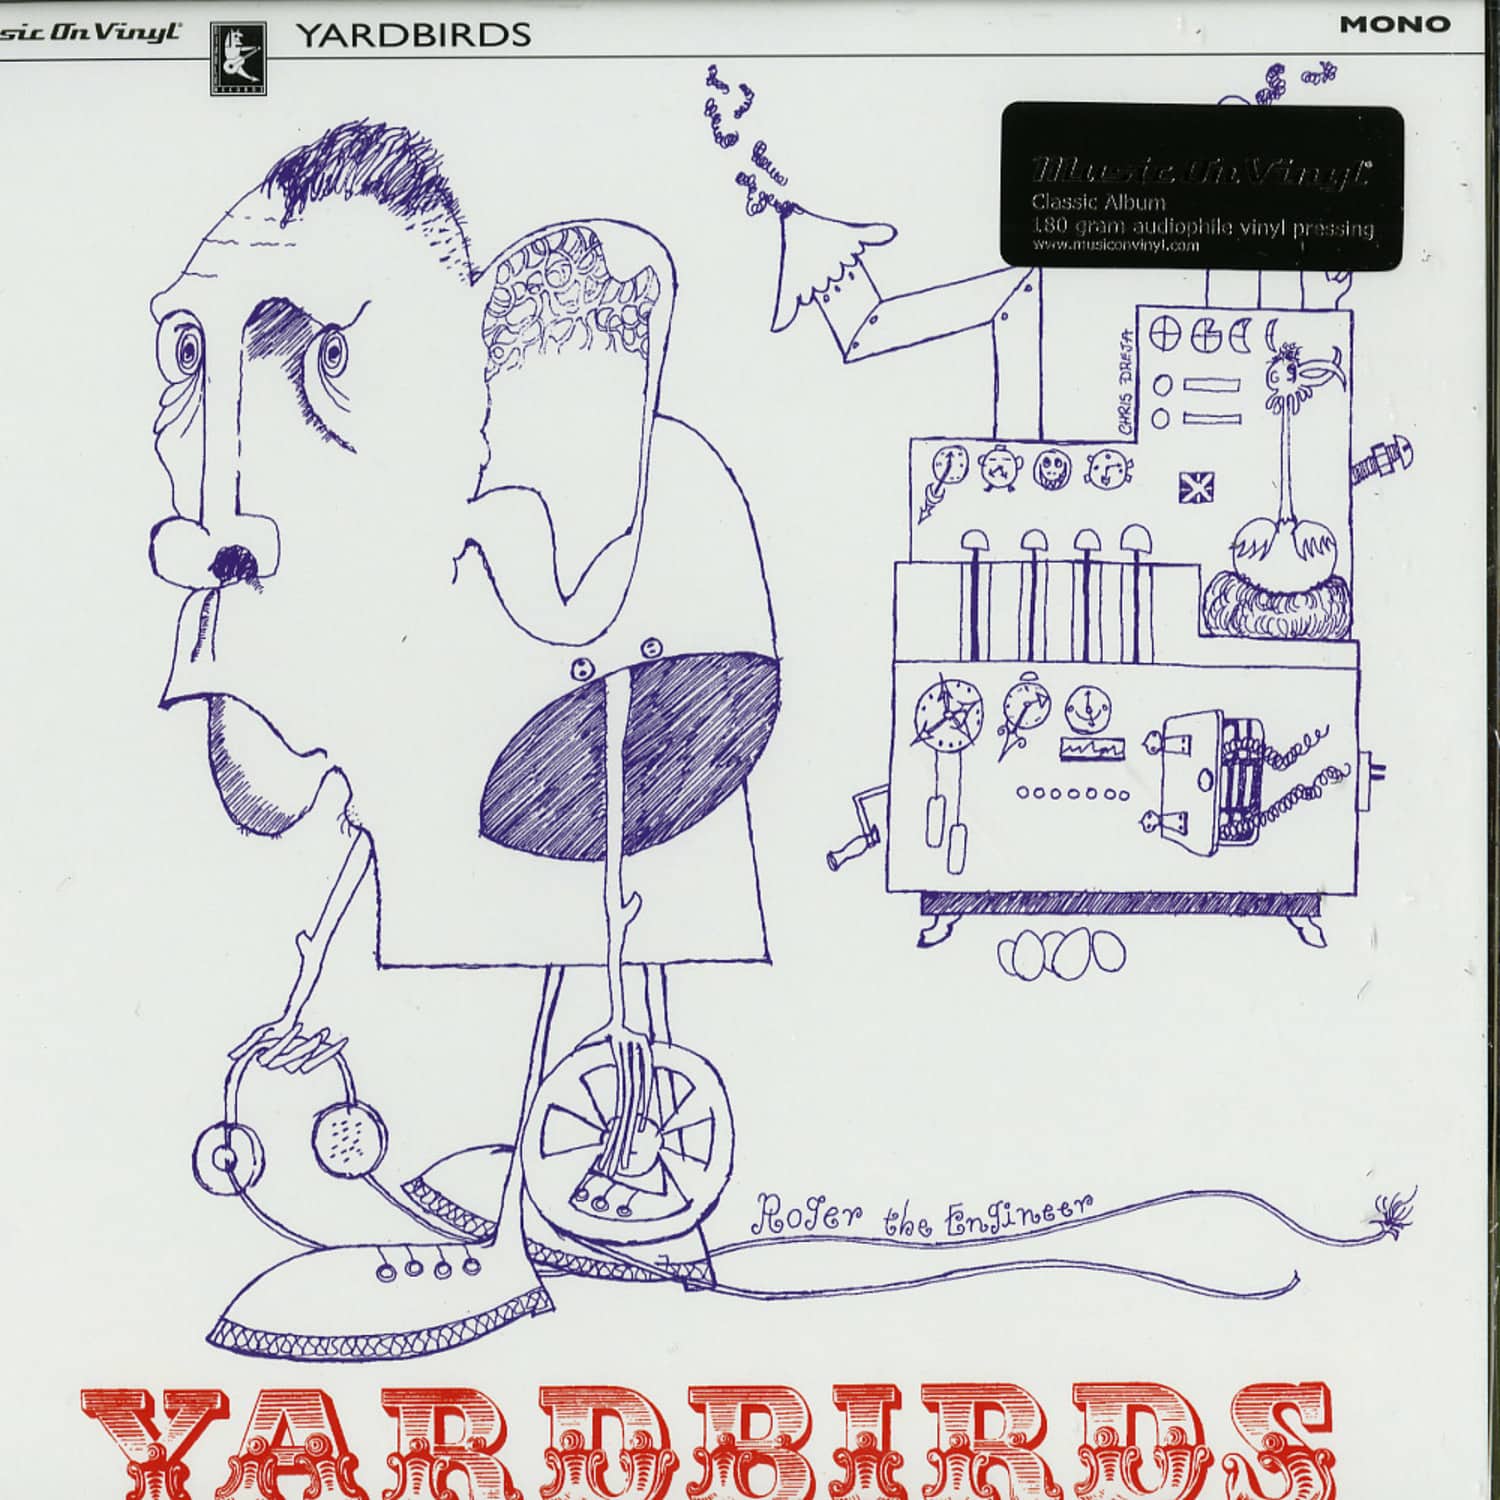 The Yardbirds - ROGER THE ENGINEER 